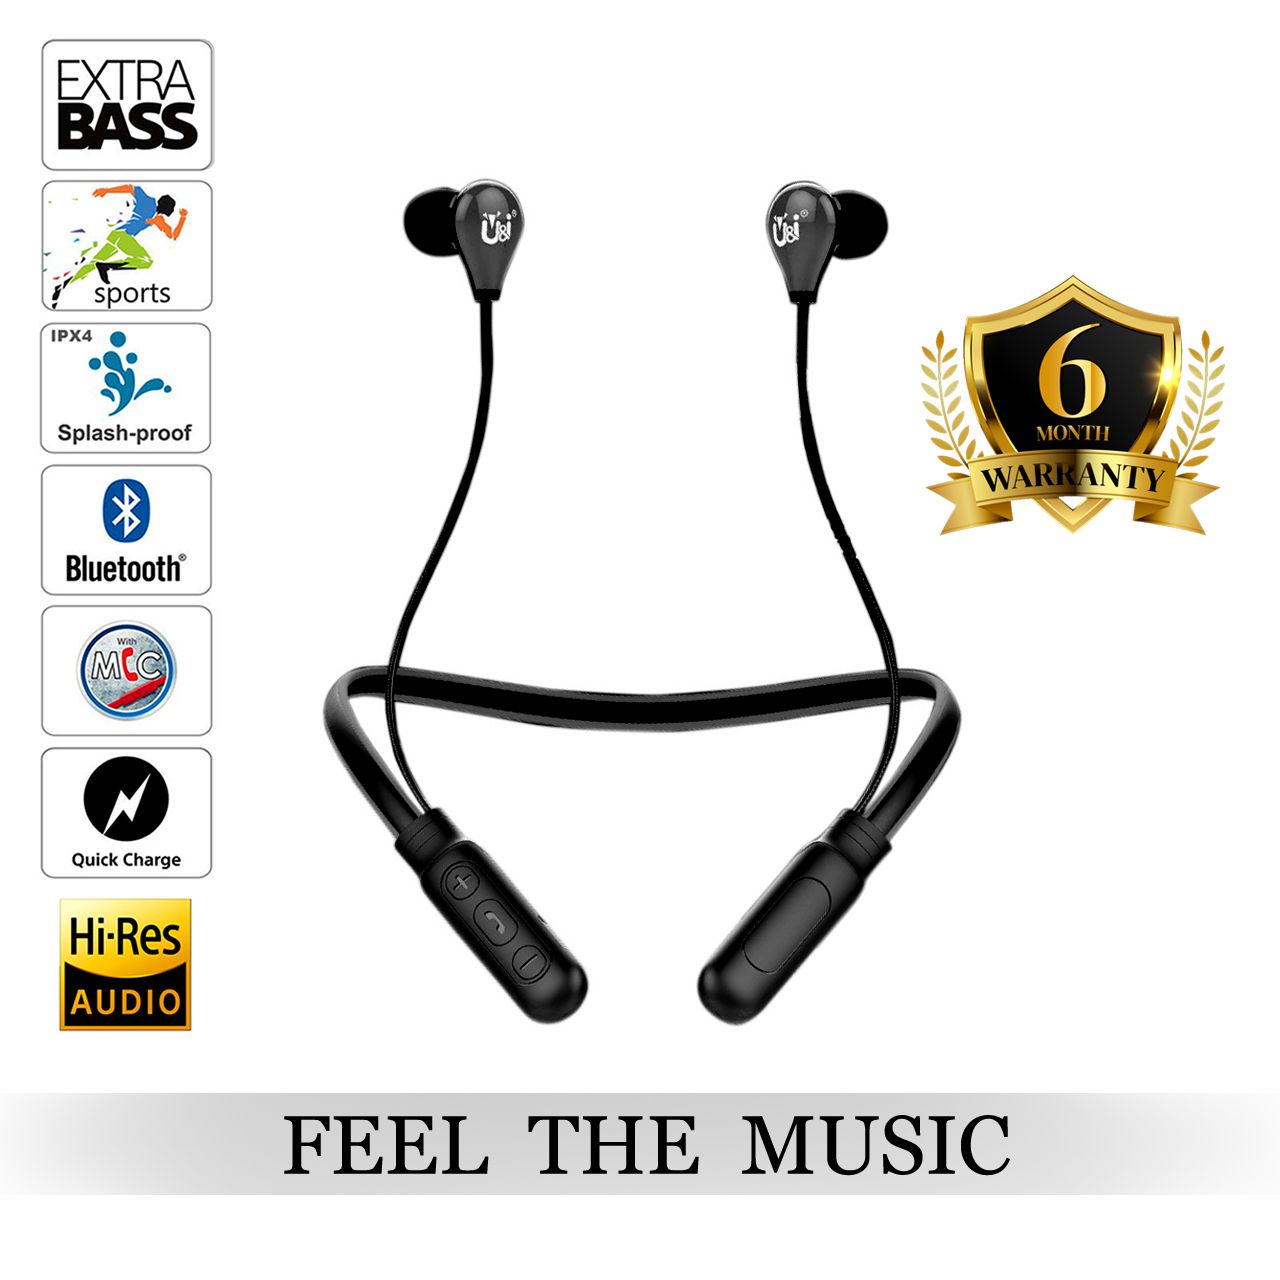 U&I DRIP 12 HOURS MUSIC PLAYBACK IPX4 4D BASS SPORT Bluetooth headphone / Bluetooth earphone Magnetic NECKBAND